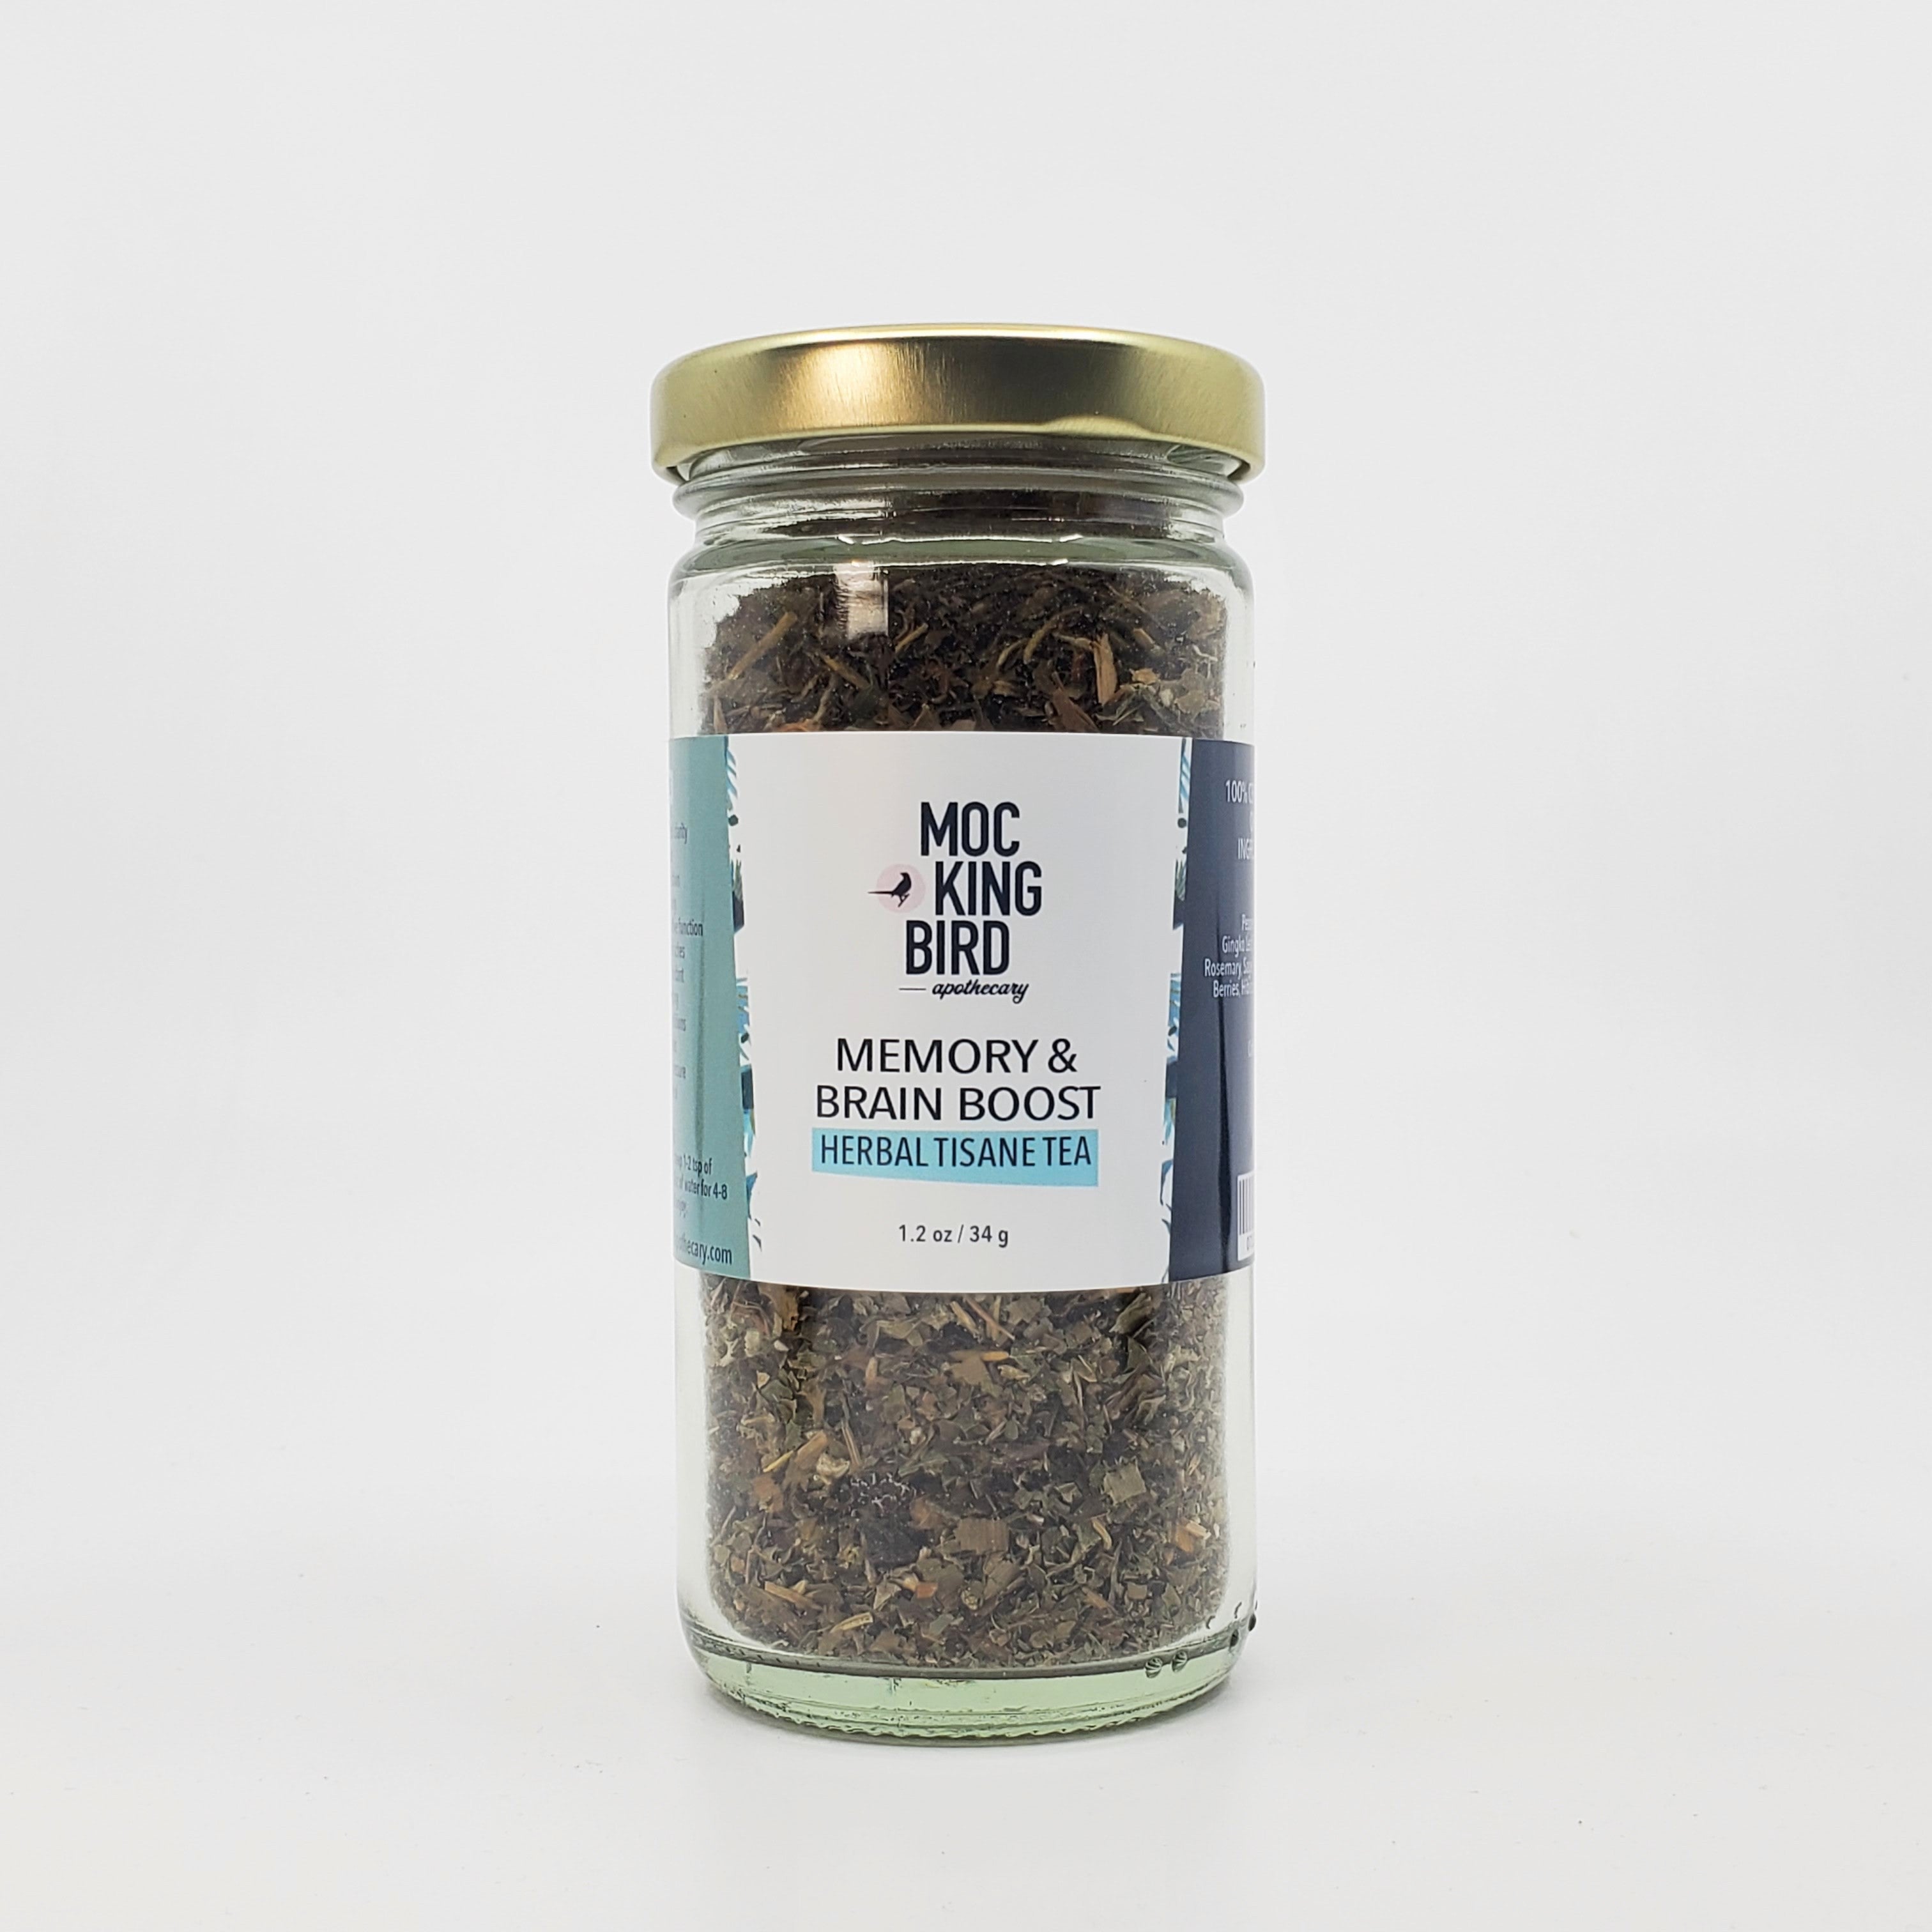 Memory & Brain Boost Herbal Tisane Tea - The Mockingbird Apothecary & General Store